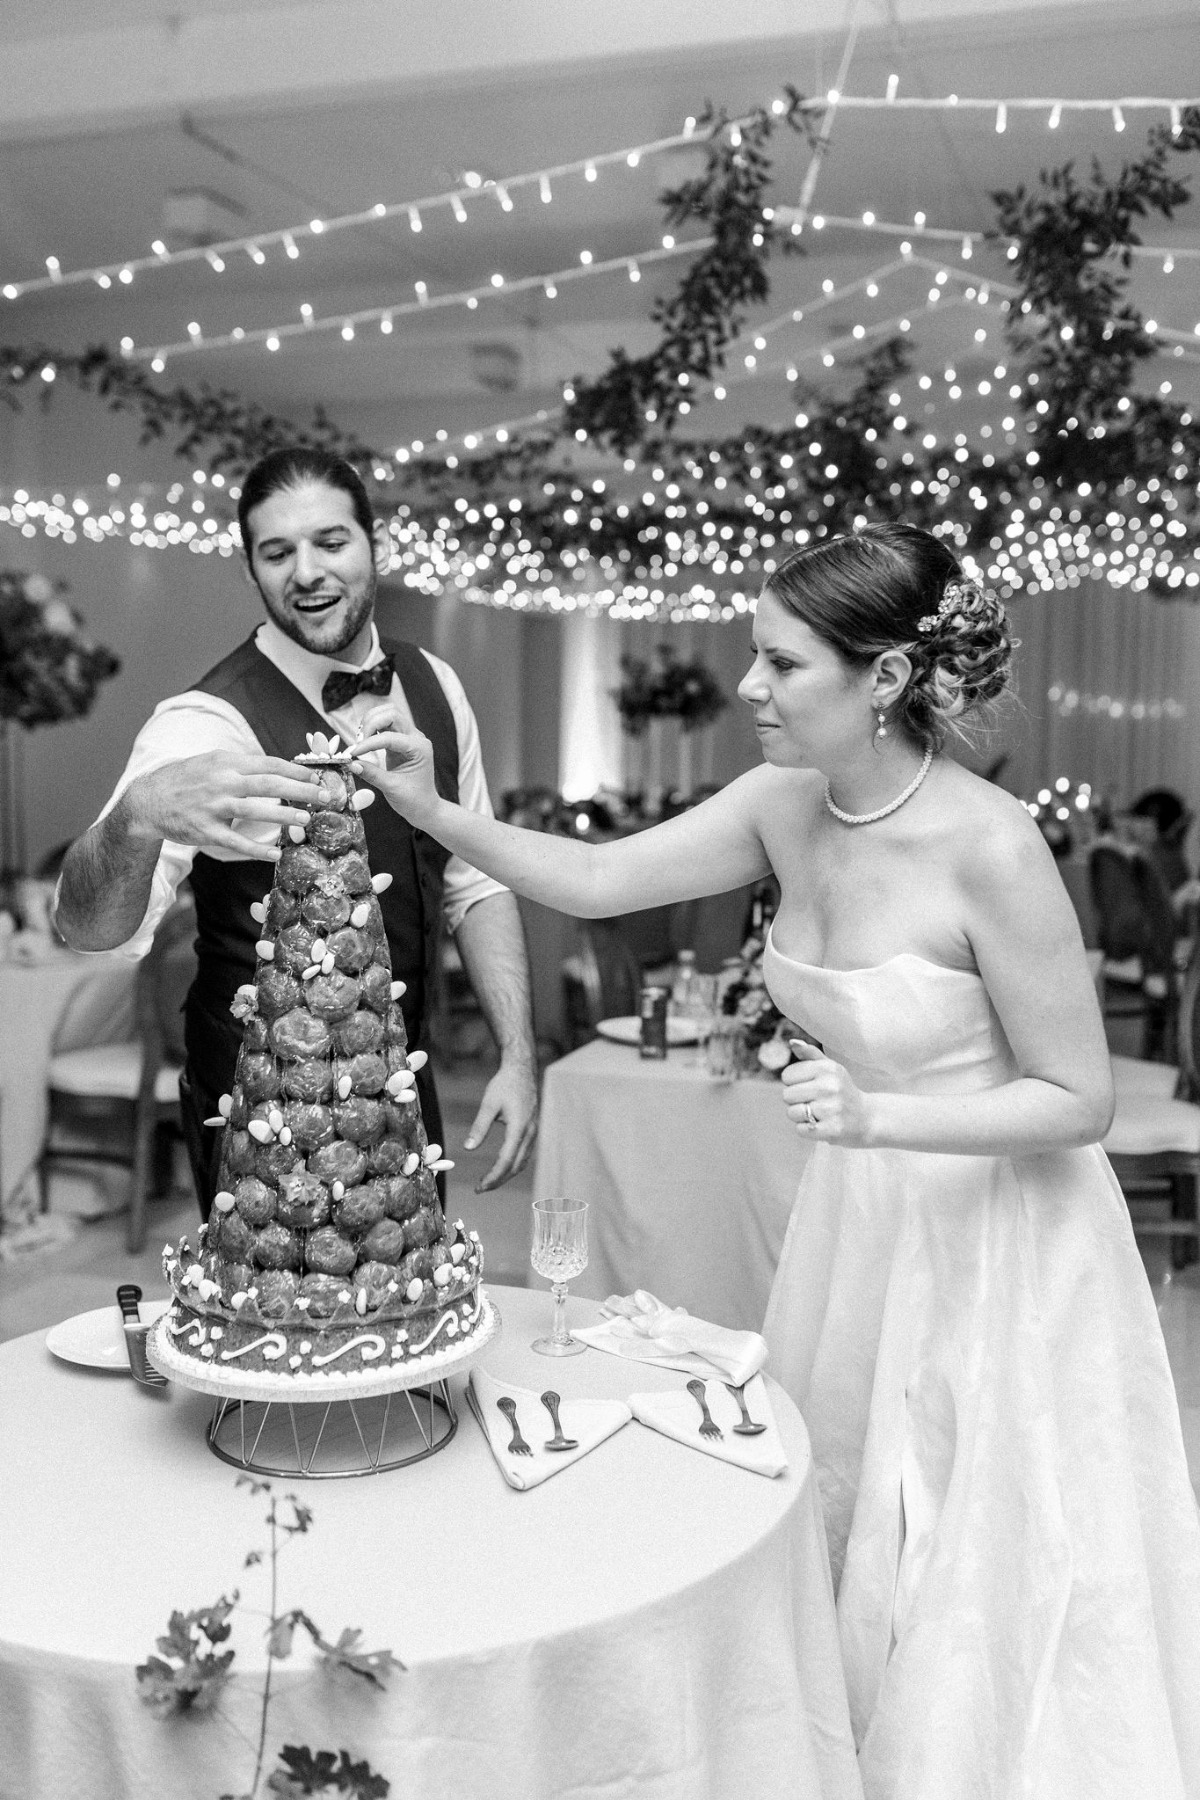 Croquembouche wedding cake cutting 